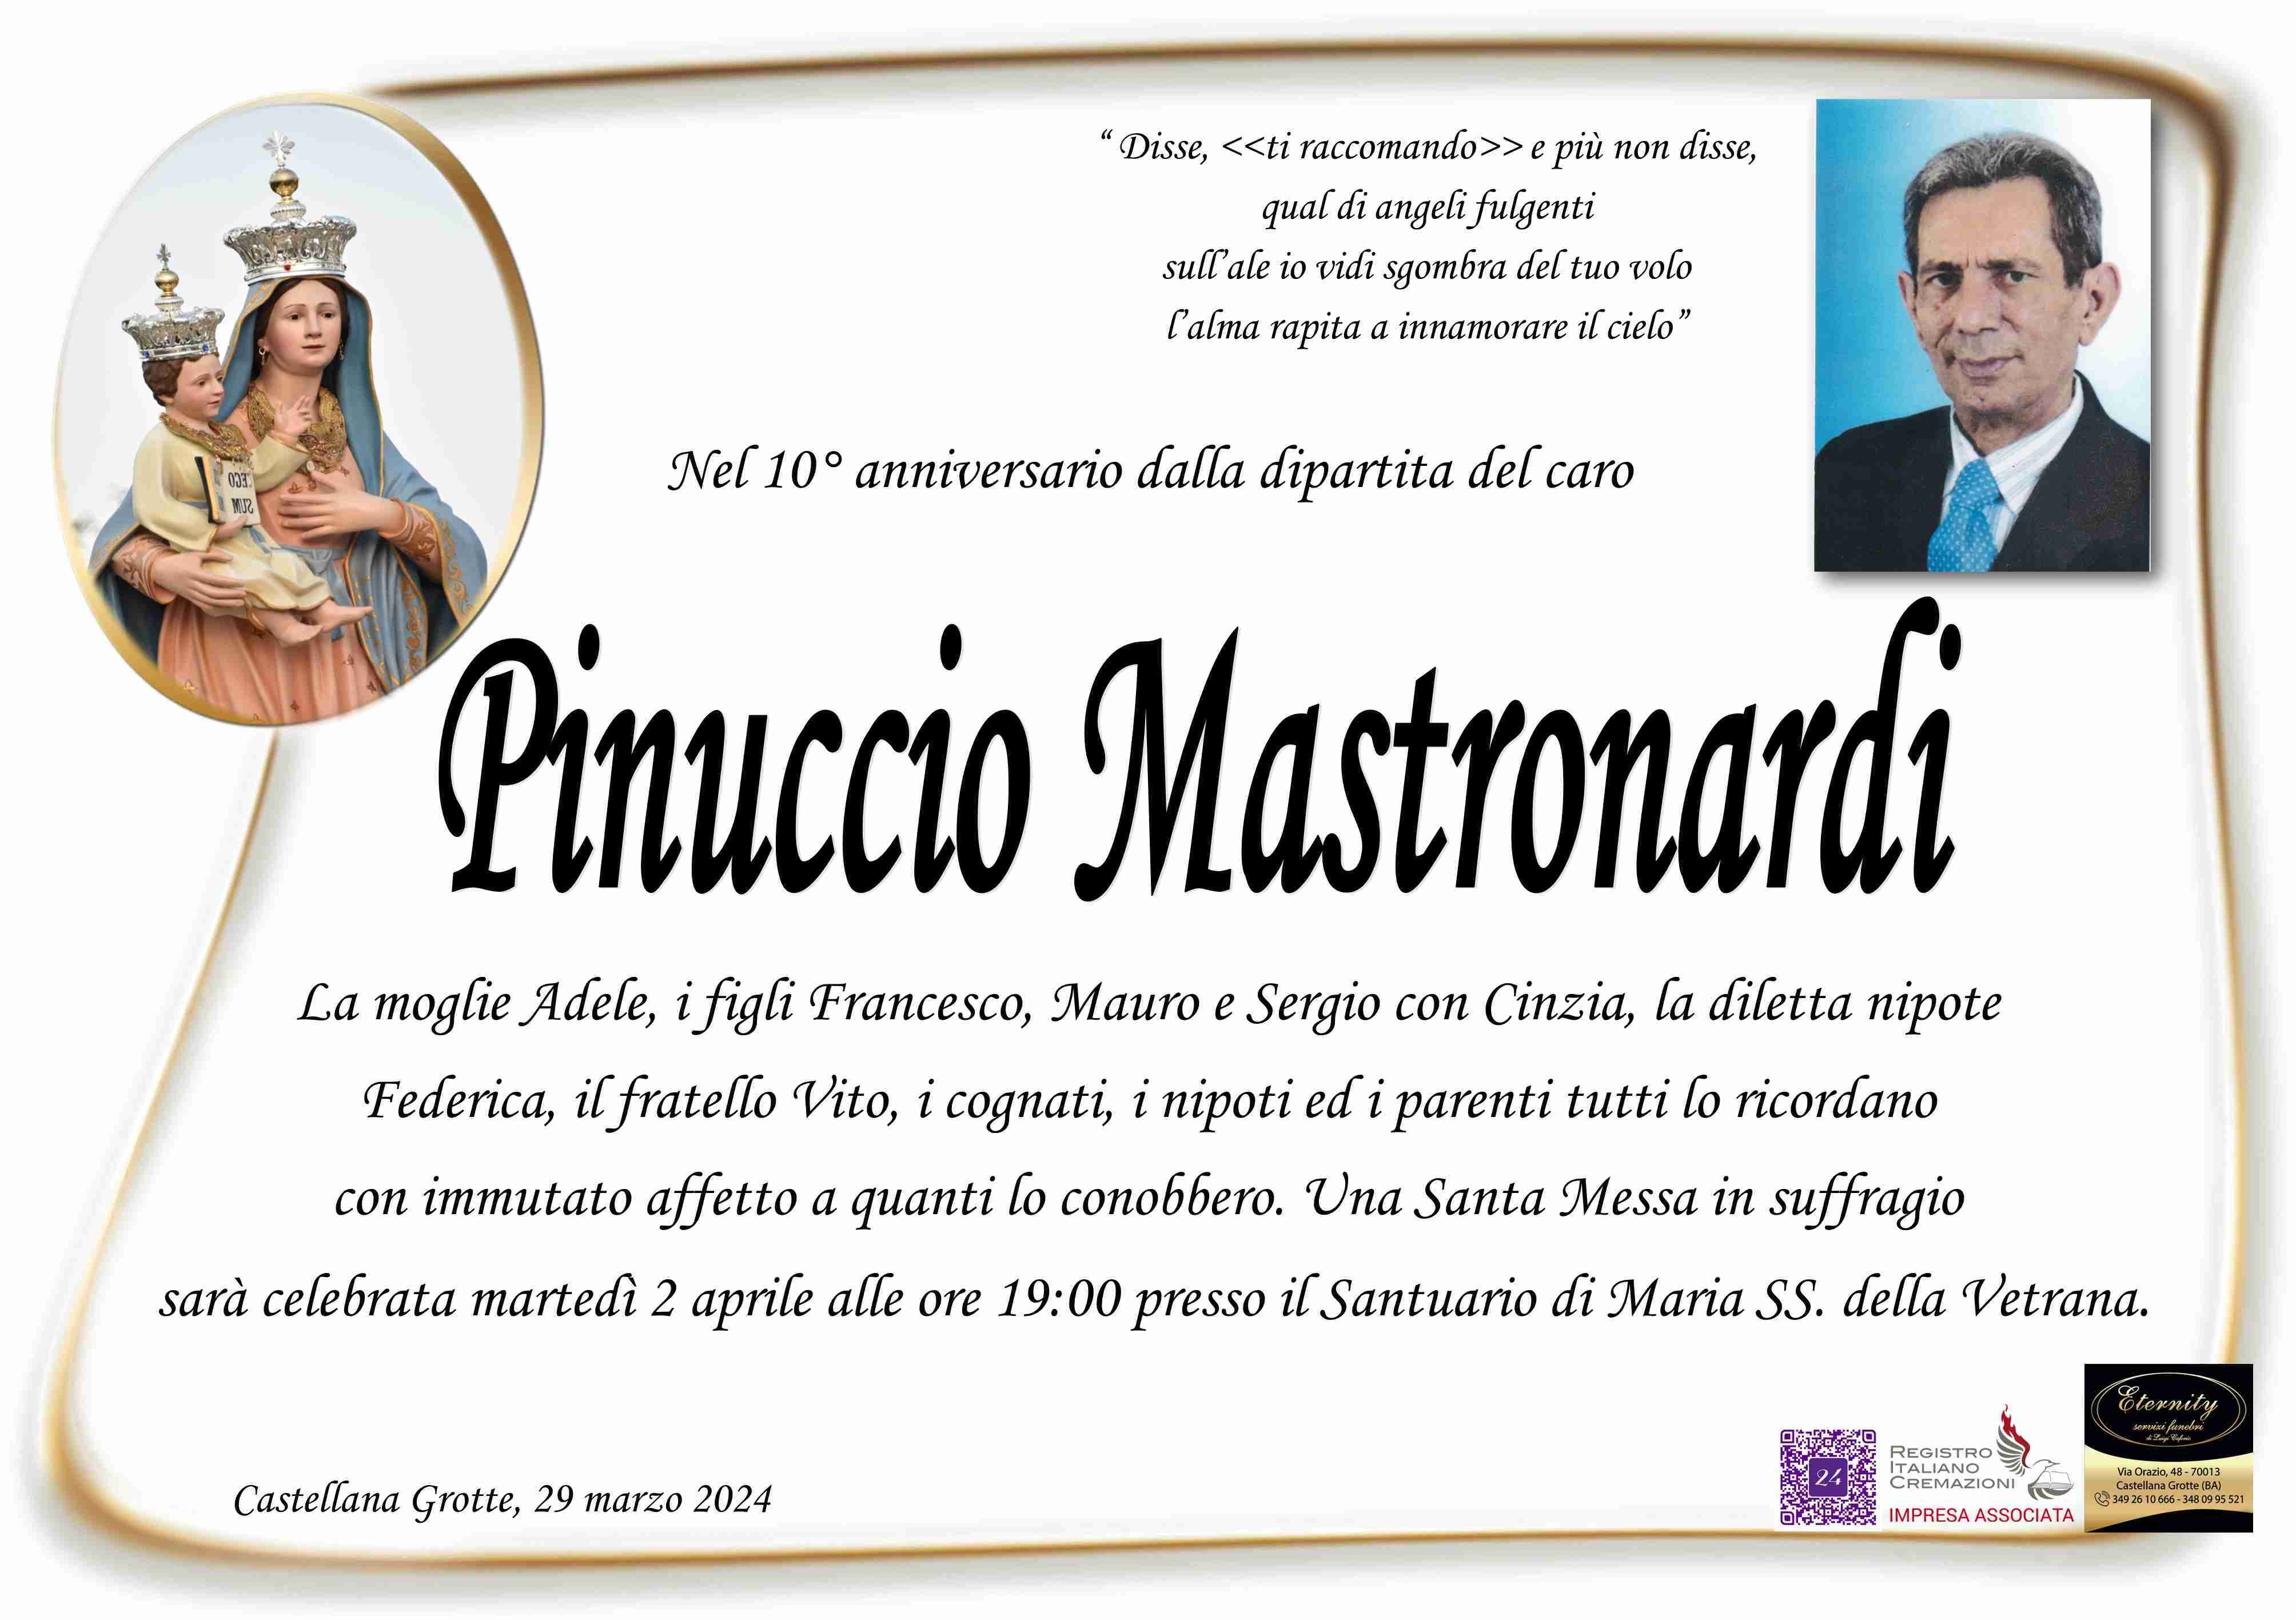 Pinuccio Mastronardi